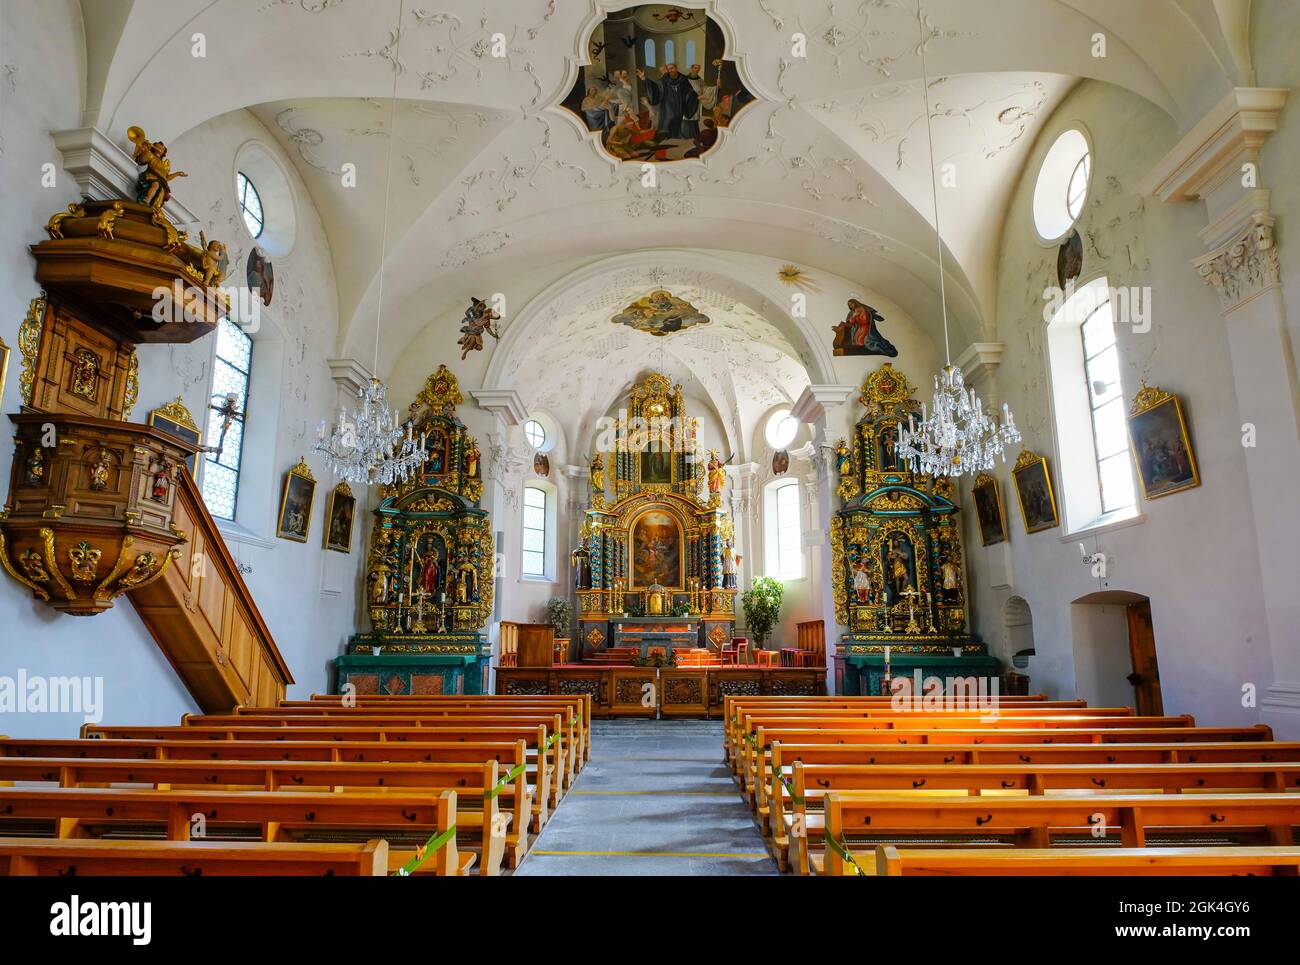 Inside the St. Gallus Church in Wassen village, Upper Reuss valley (Oberes Reusstal), Switzerland. Altars were built by Valais native Jost Ritz and ar Stock Photo